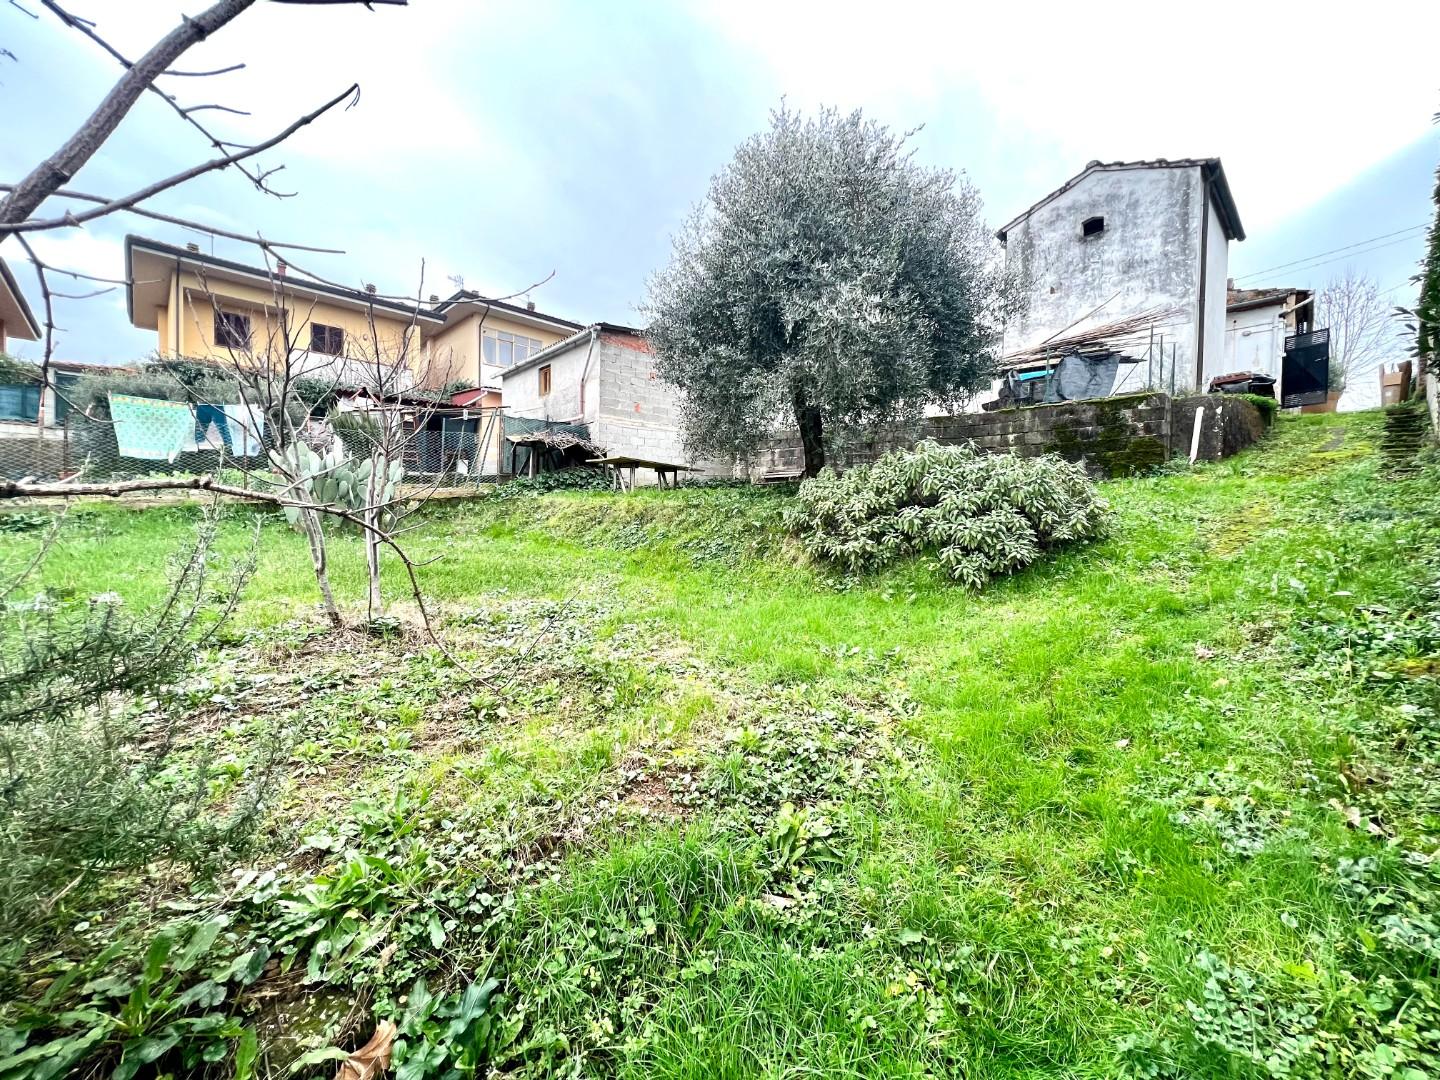 Villa Bifamiliare con giardino, Bientina santa colomba